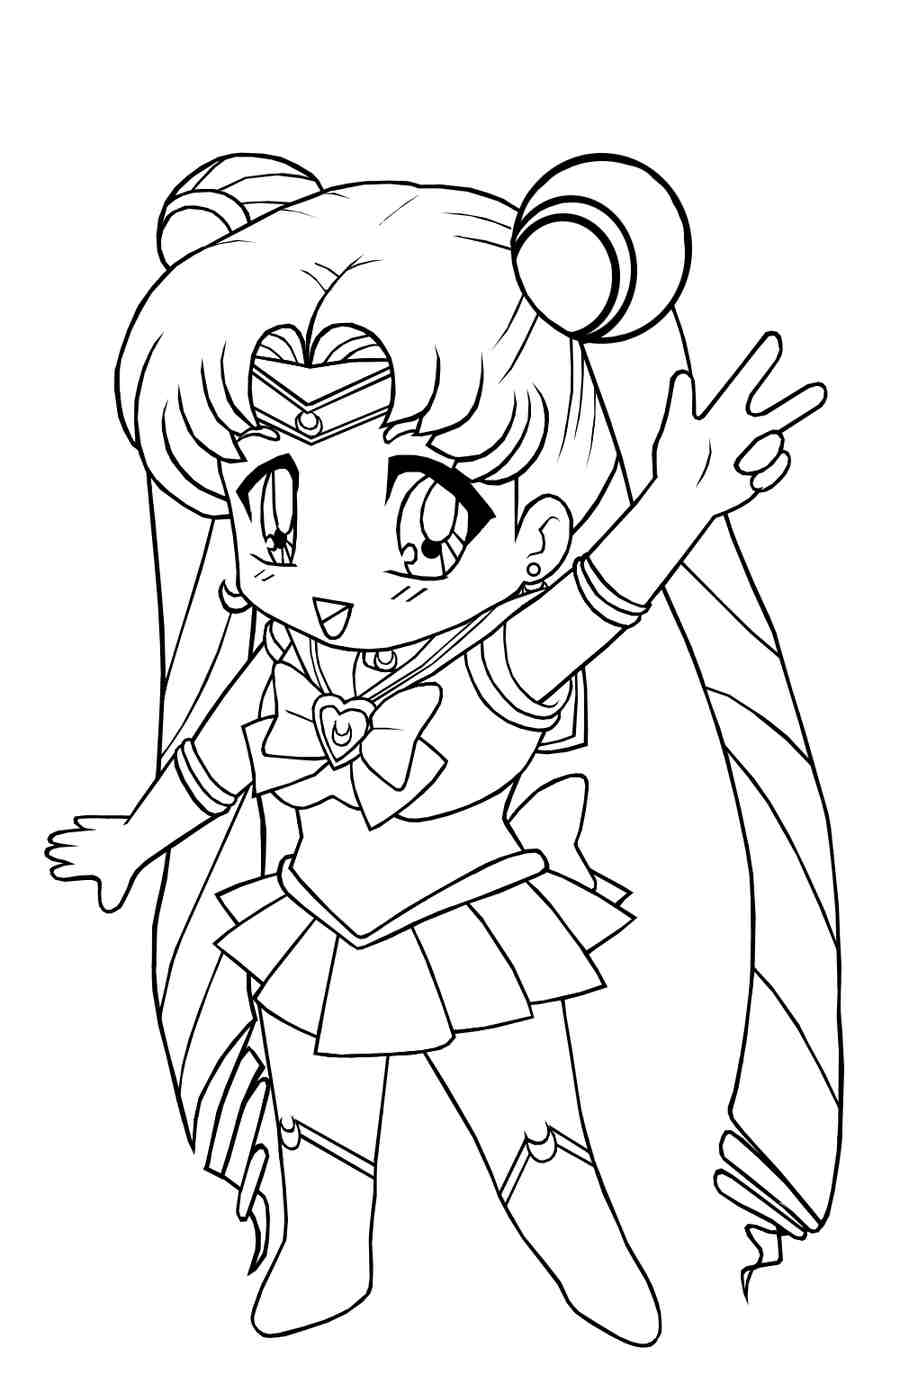 Happy Chibi Sailor moon يرتدي زي بحار بأكمام قصيرة صفحة التلوين